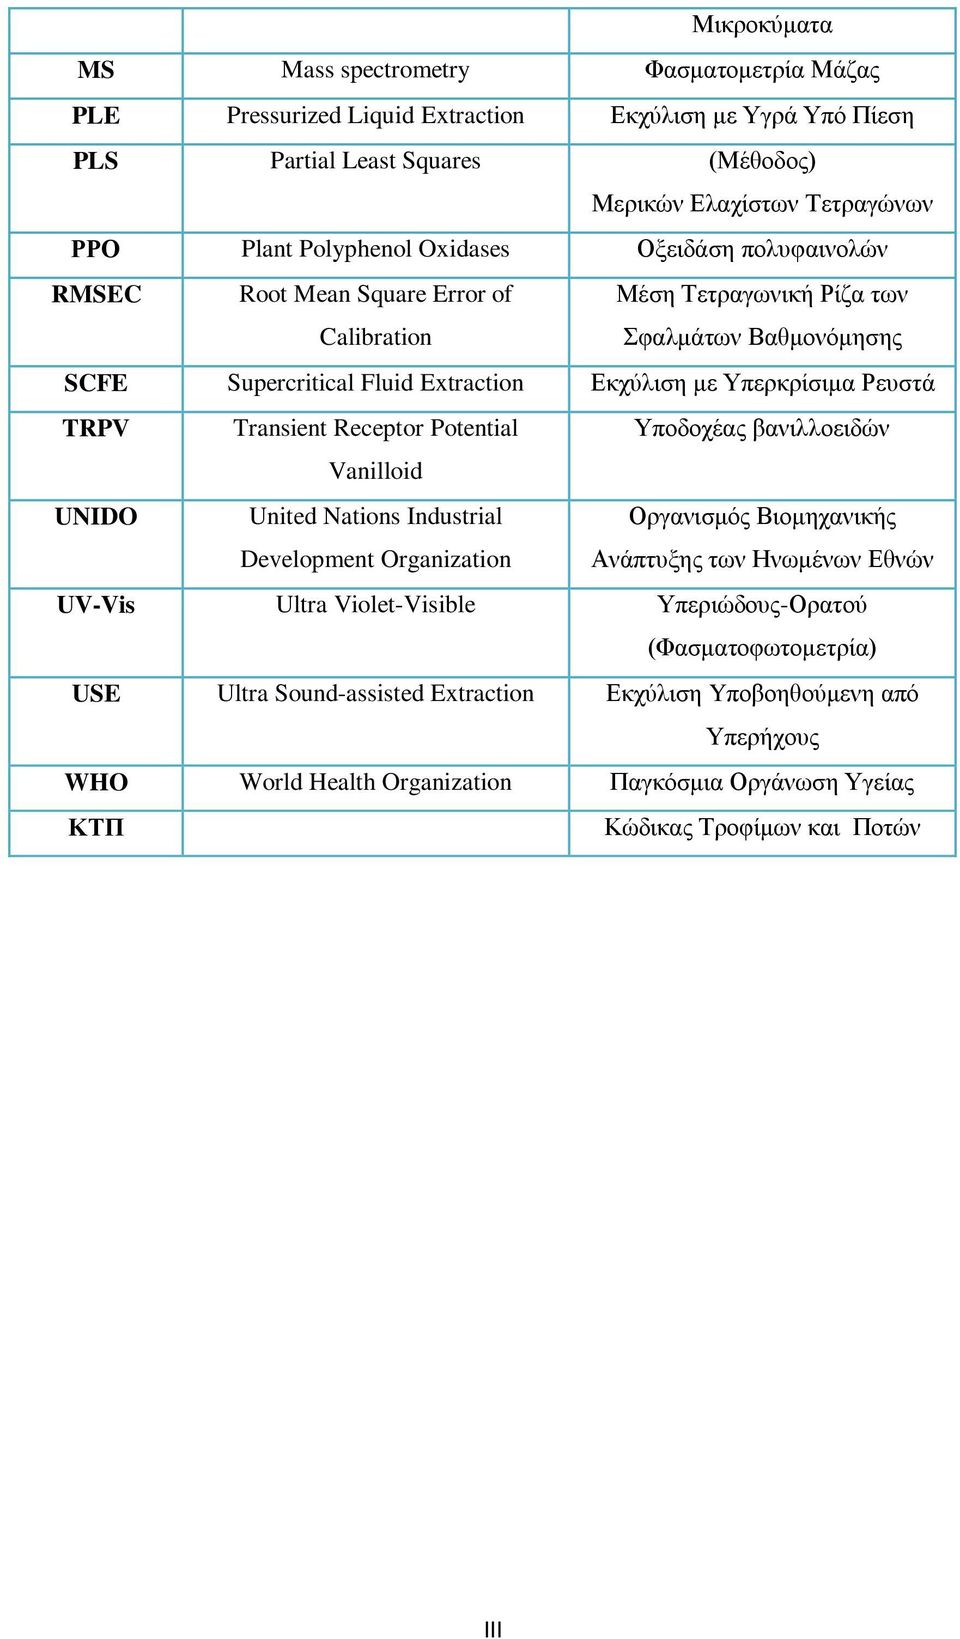 Transient Receptor Potential Υποδοχέας βανιλλοειδών Vanilloid UNIDO United Nations Industrial Development Organization Οργανισμός Βιομηχανικής Ανάπτυξης των Ηνωμένων Εθνών UV-Vis Ultra Violet-Visible